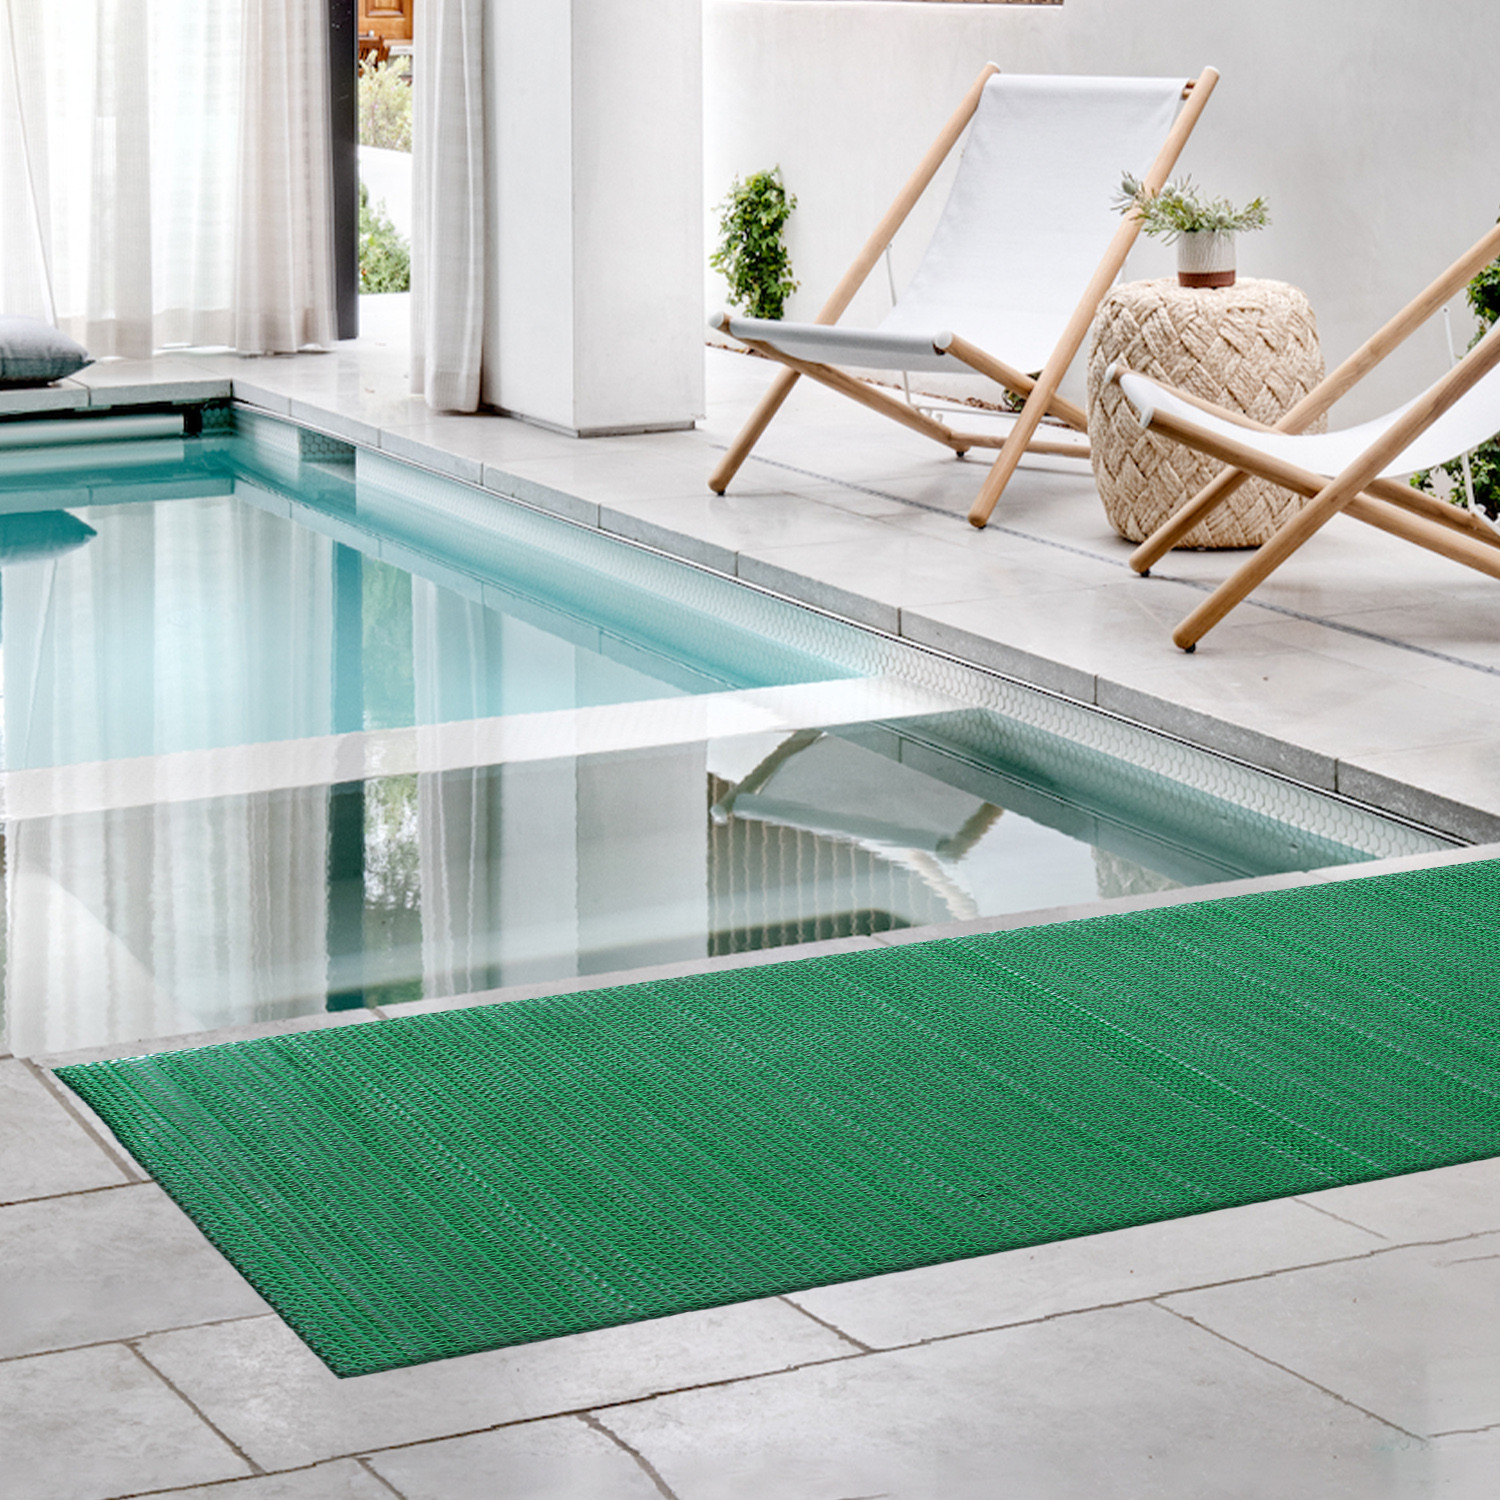 Kuber Industries Rubber Waterproof Anti-Skid Swimming Pool Mat|Shower Mat|Rainmat For Entrance Area,Bathroom,2 x 14 Feet (Green)